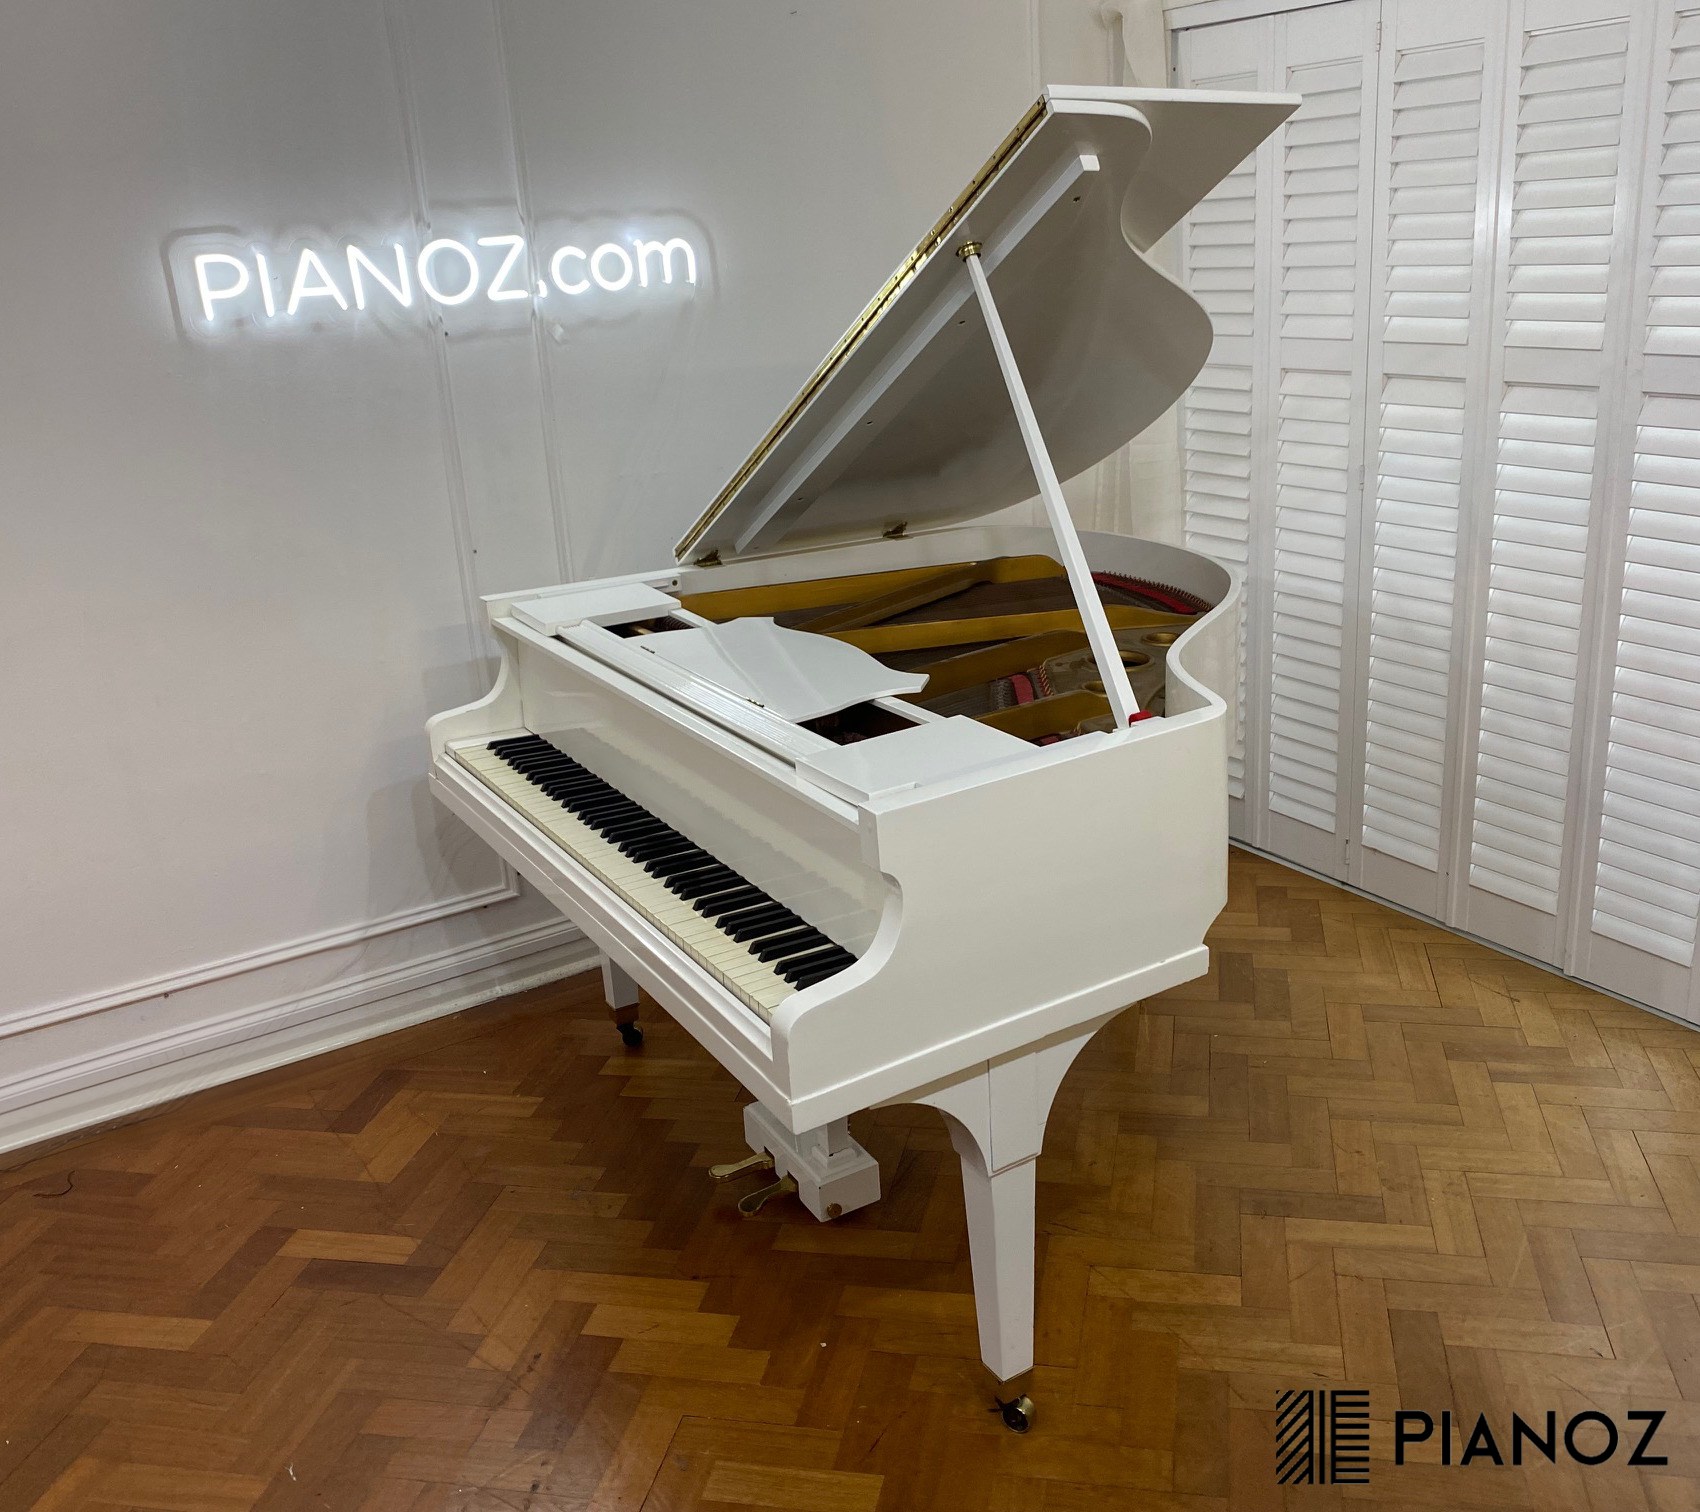 Steinbach White Gloss Baby Grand Piano piano for sale in UK